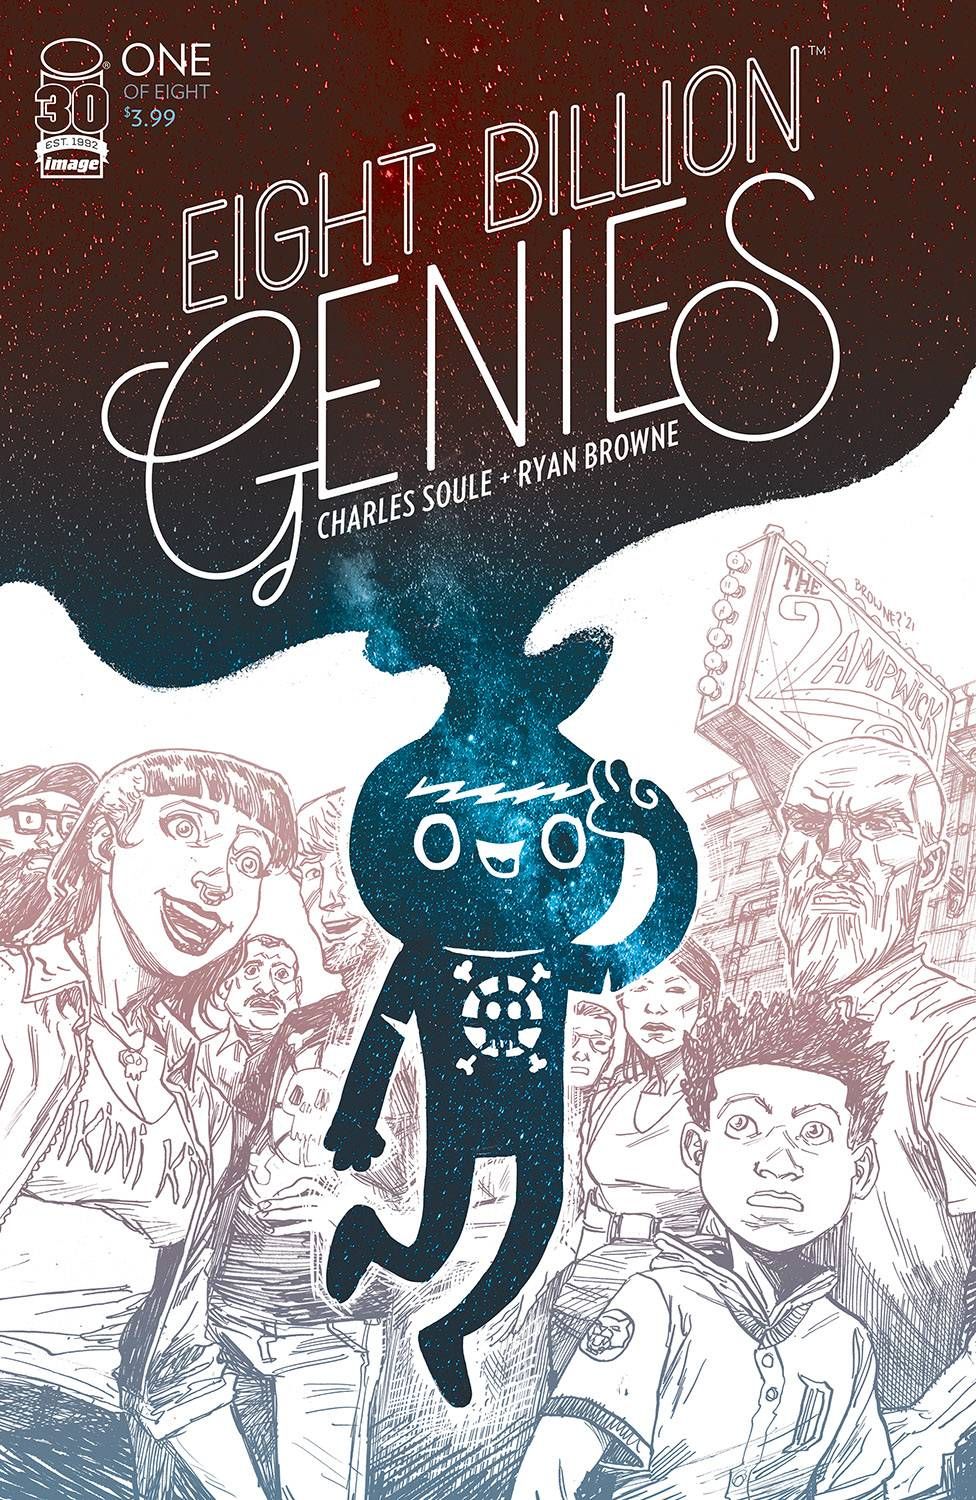 Eight Billion Genies #1 Comic